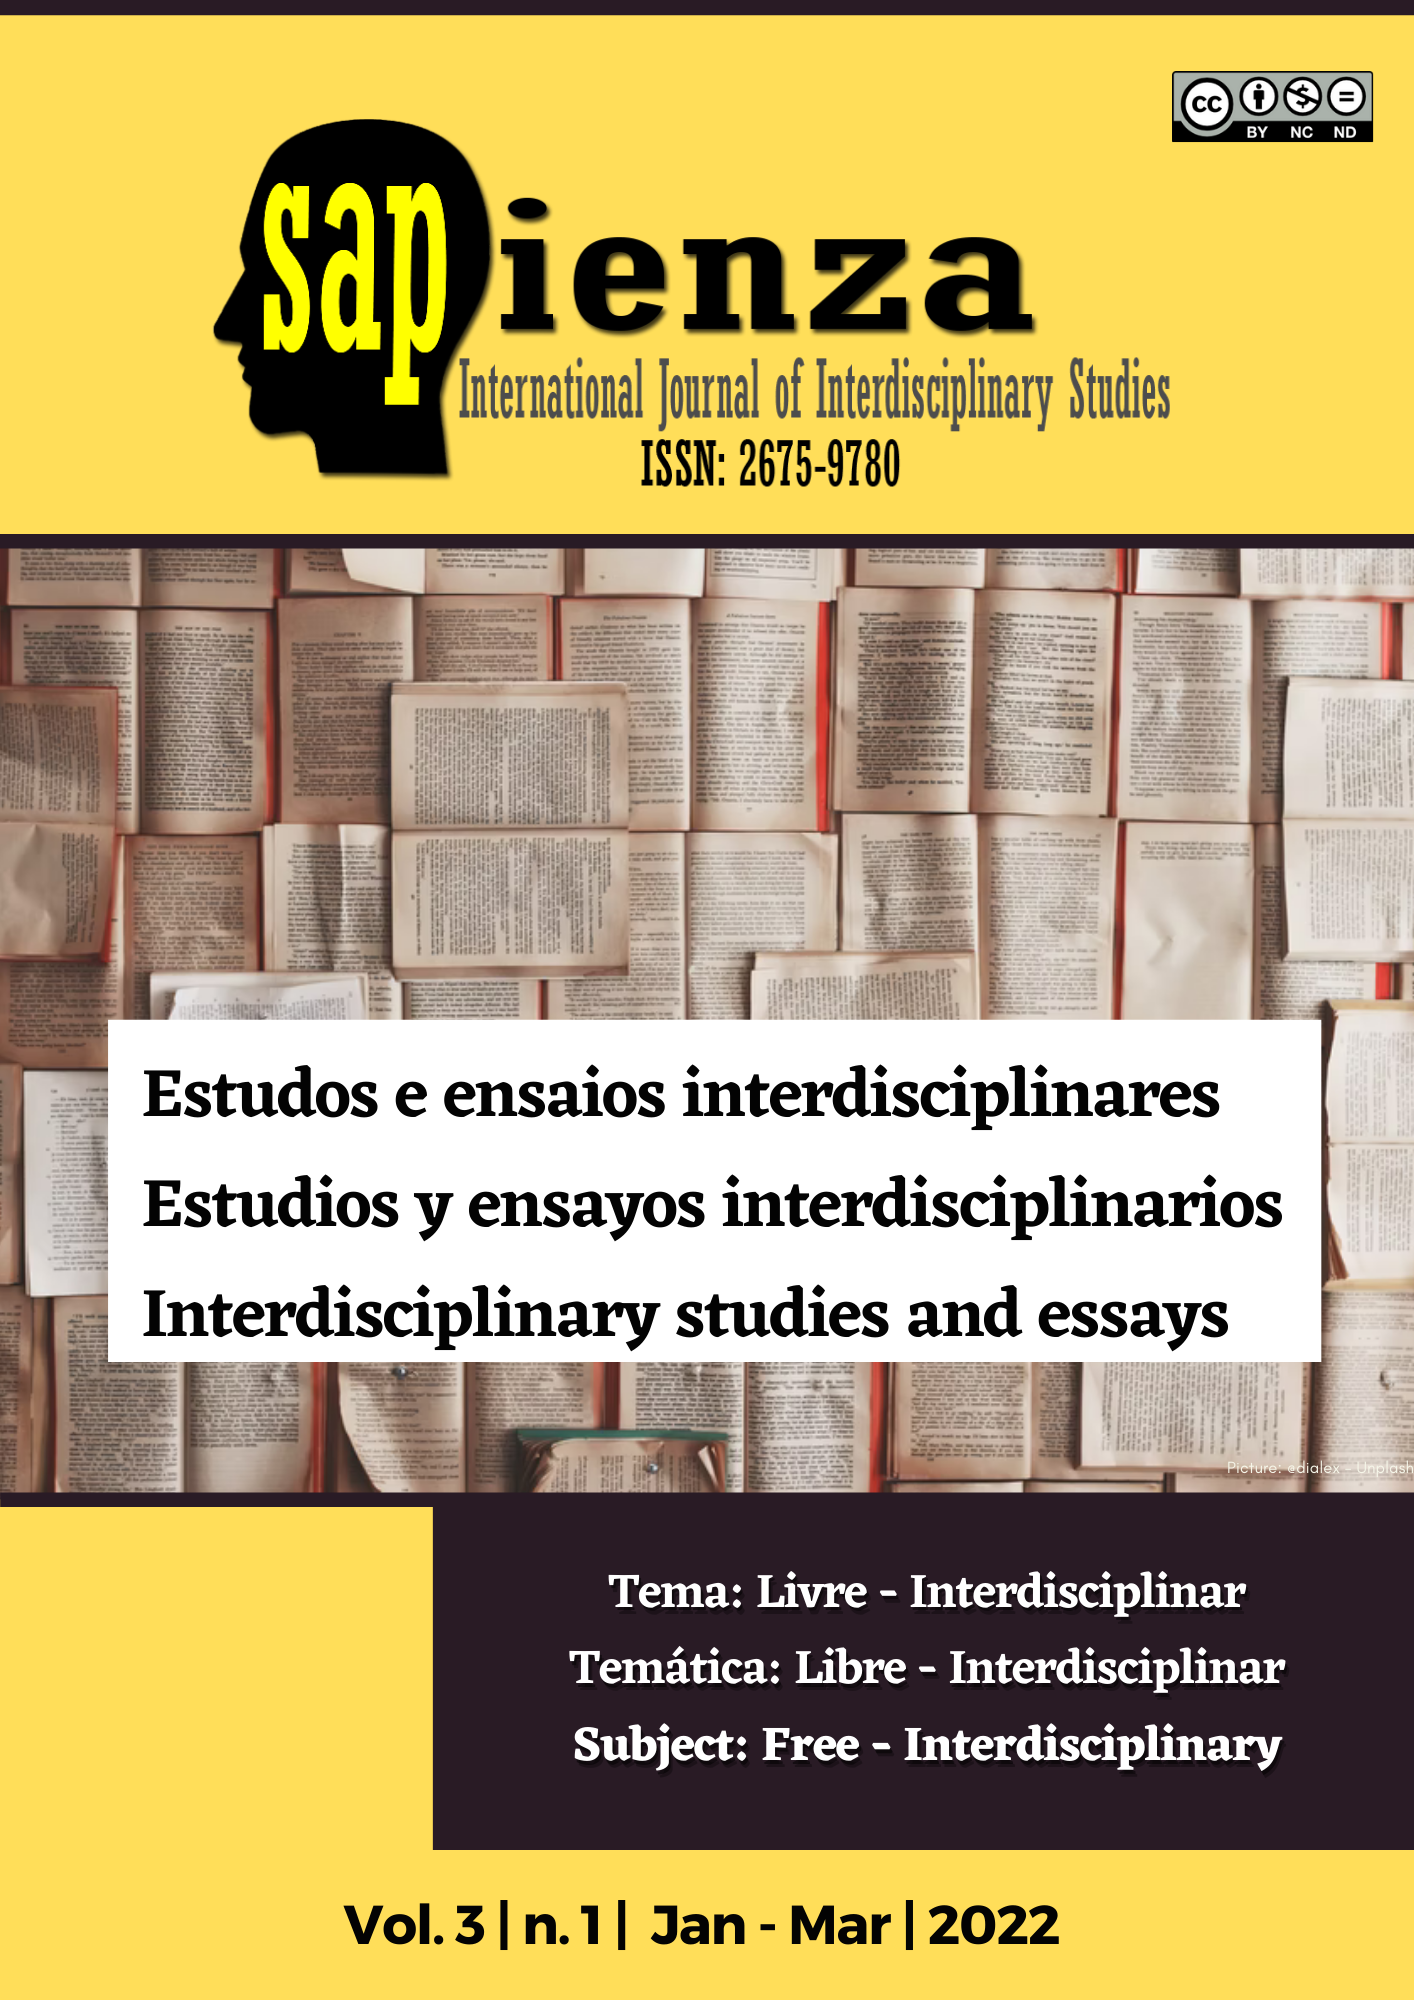 					View Vol. 3 No. 1 (2022): Interdisciplinary studies and essays: Free subject
				